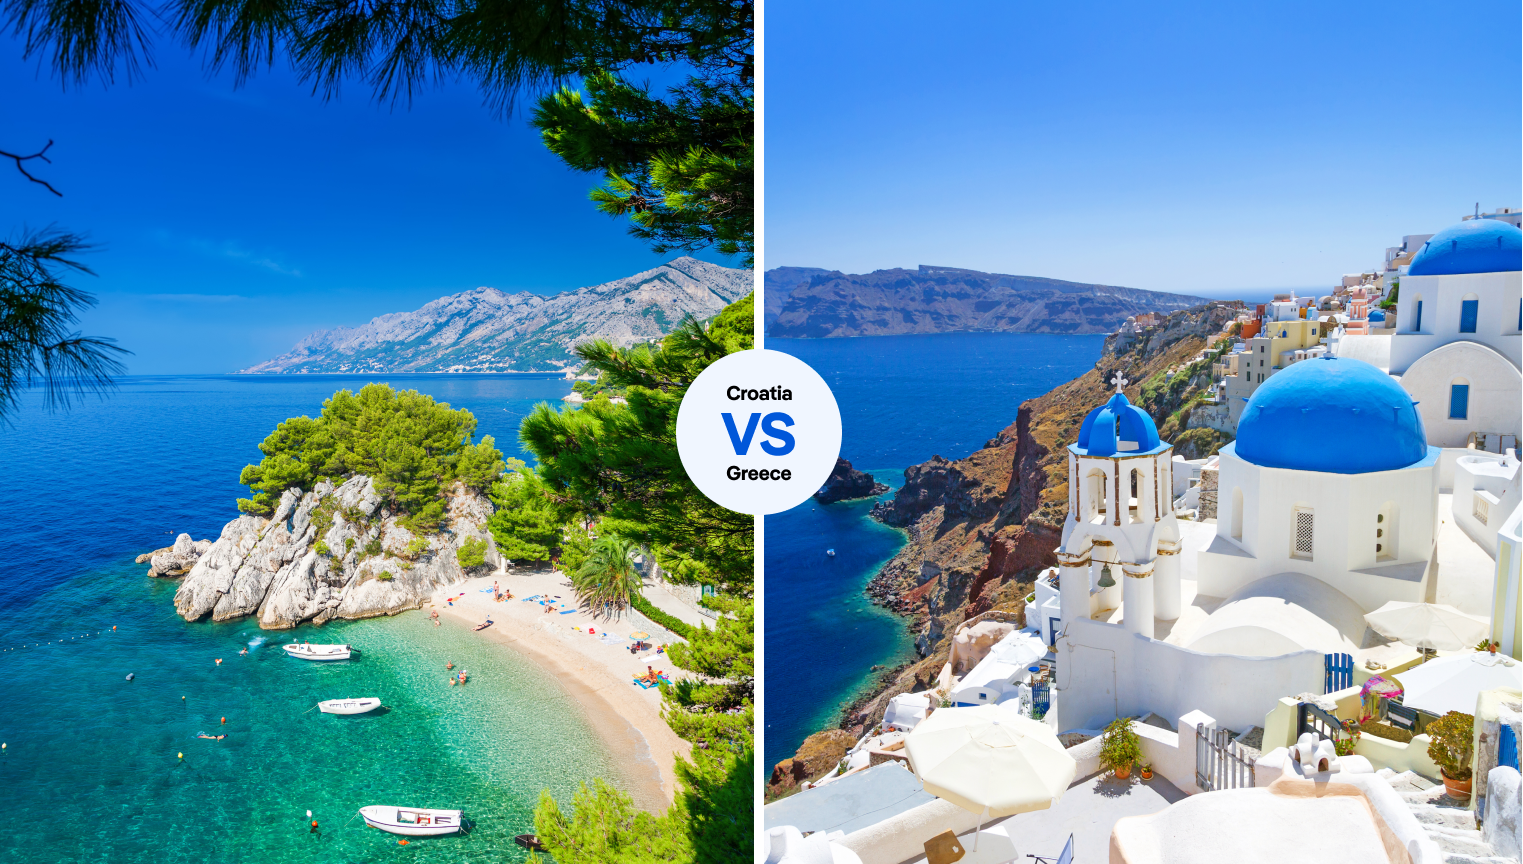 Should you visit Greece or Croatia?